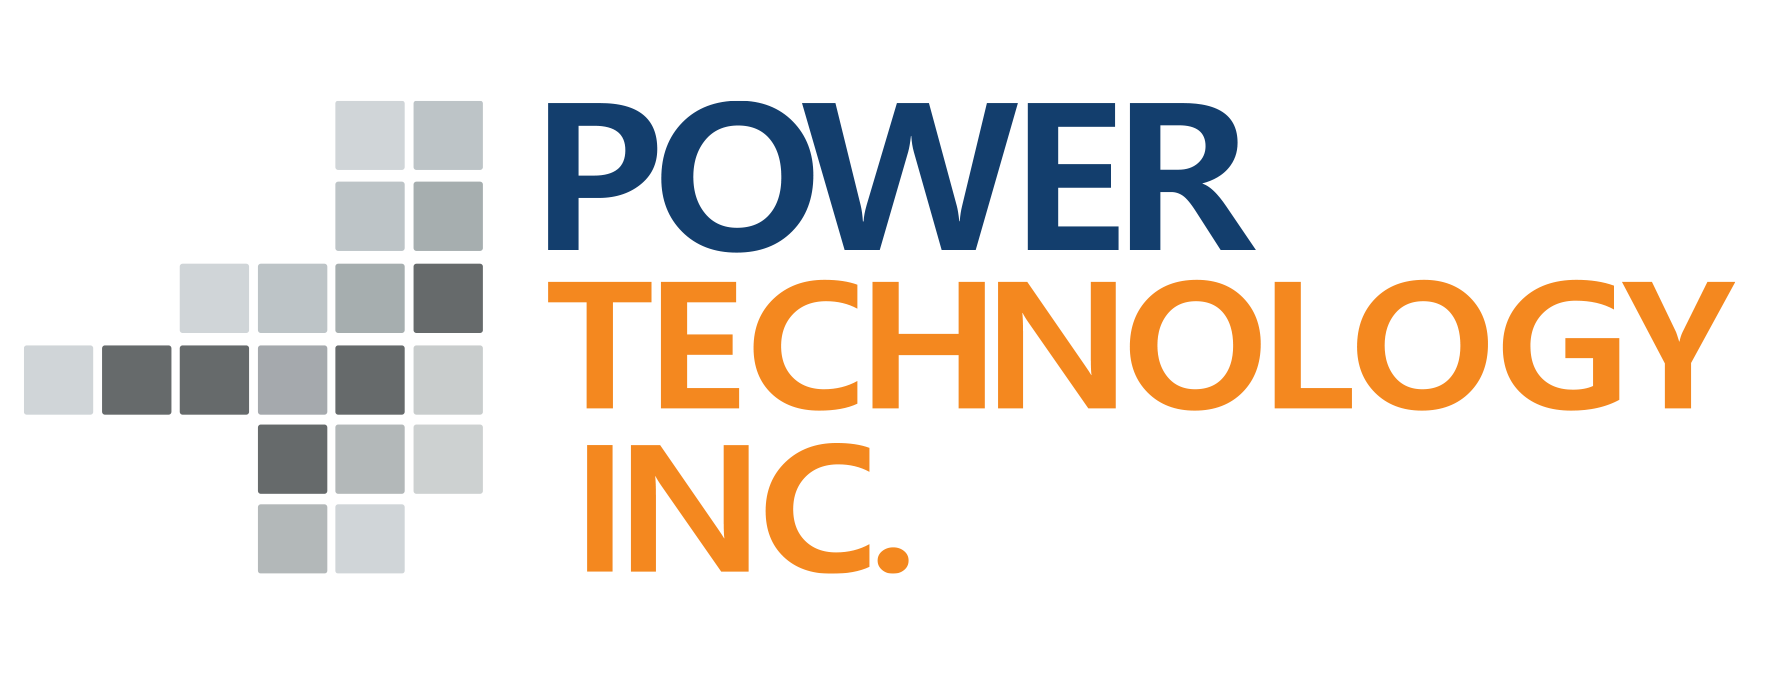 Power Technology Inc.